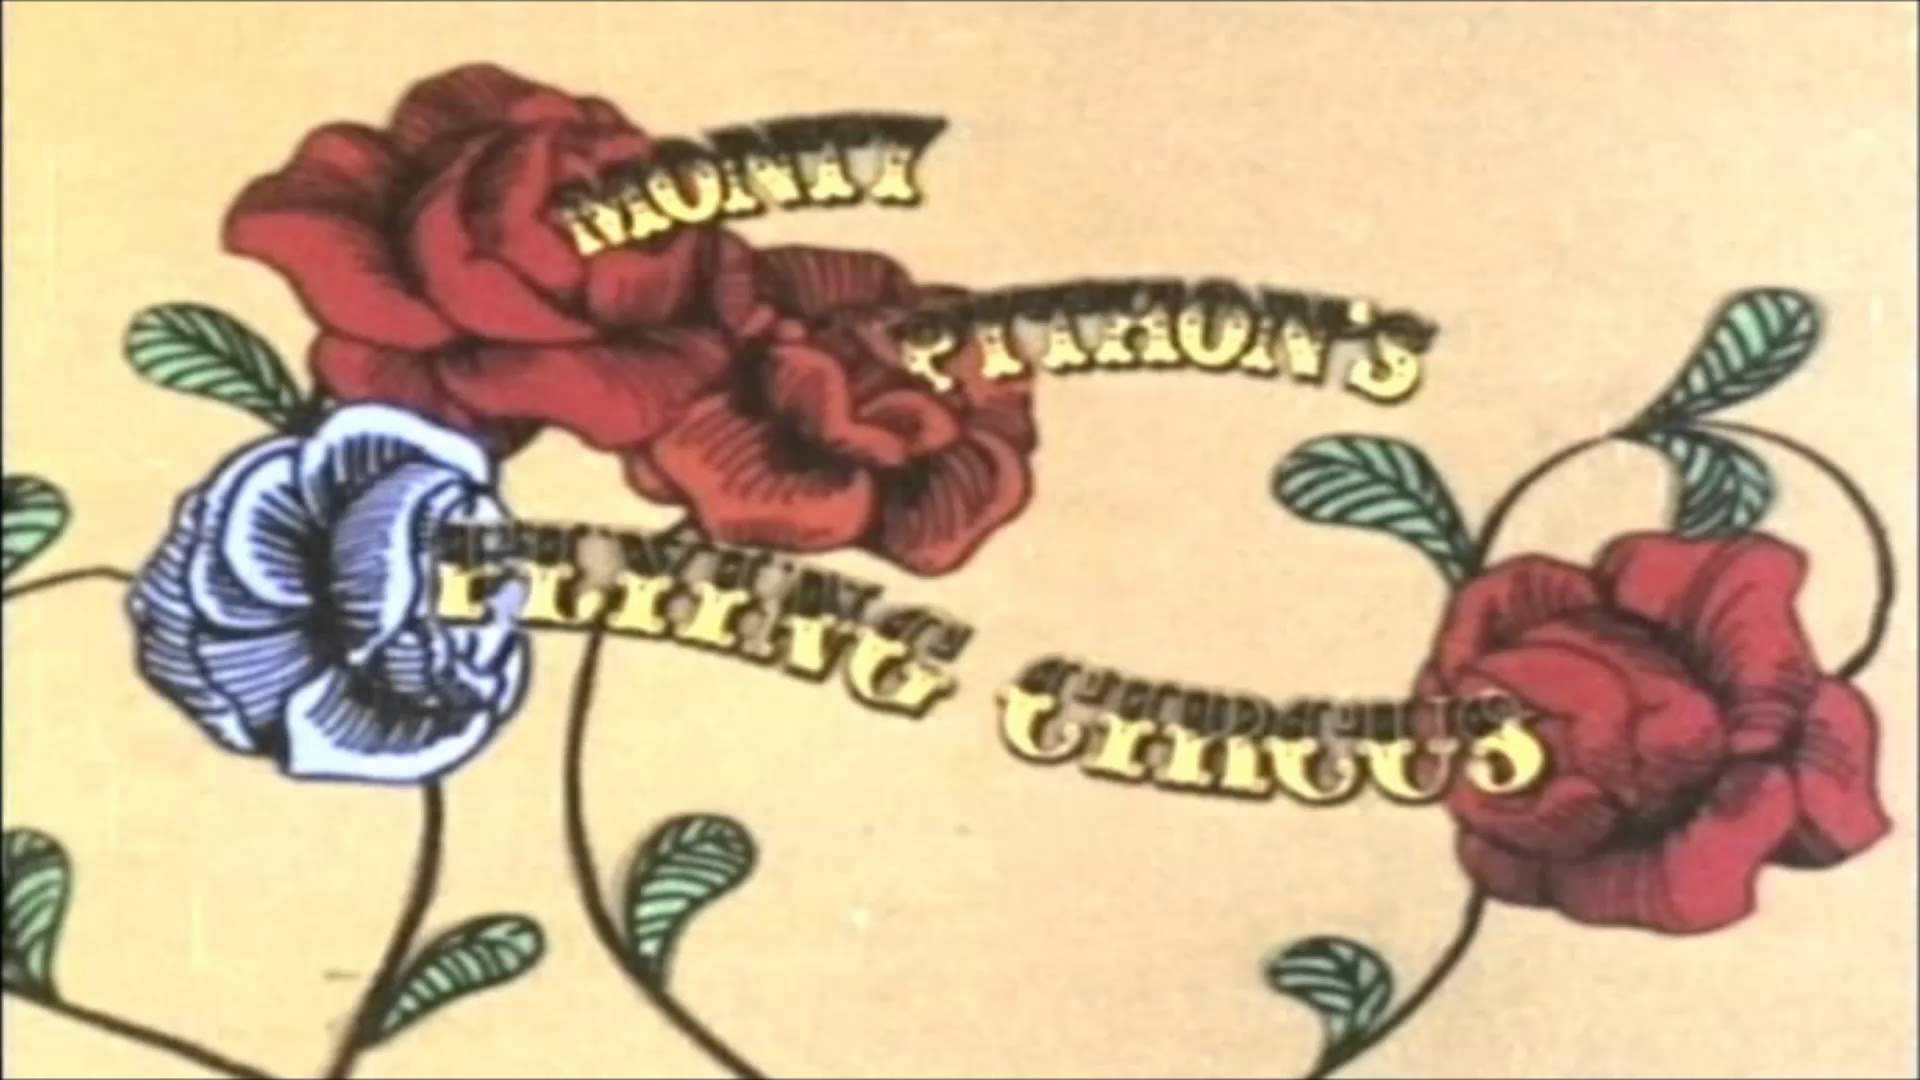 Monty Python's Flying Circus #1